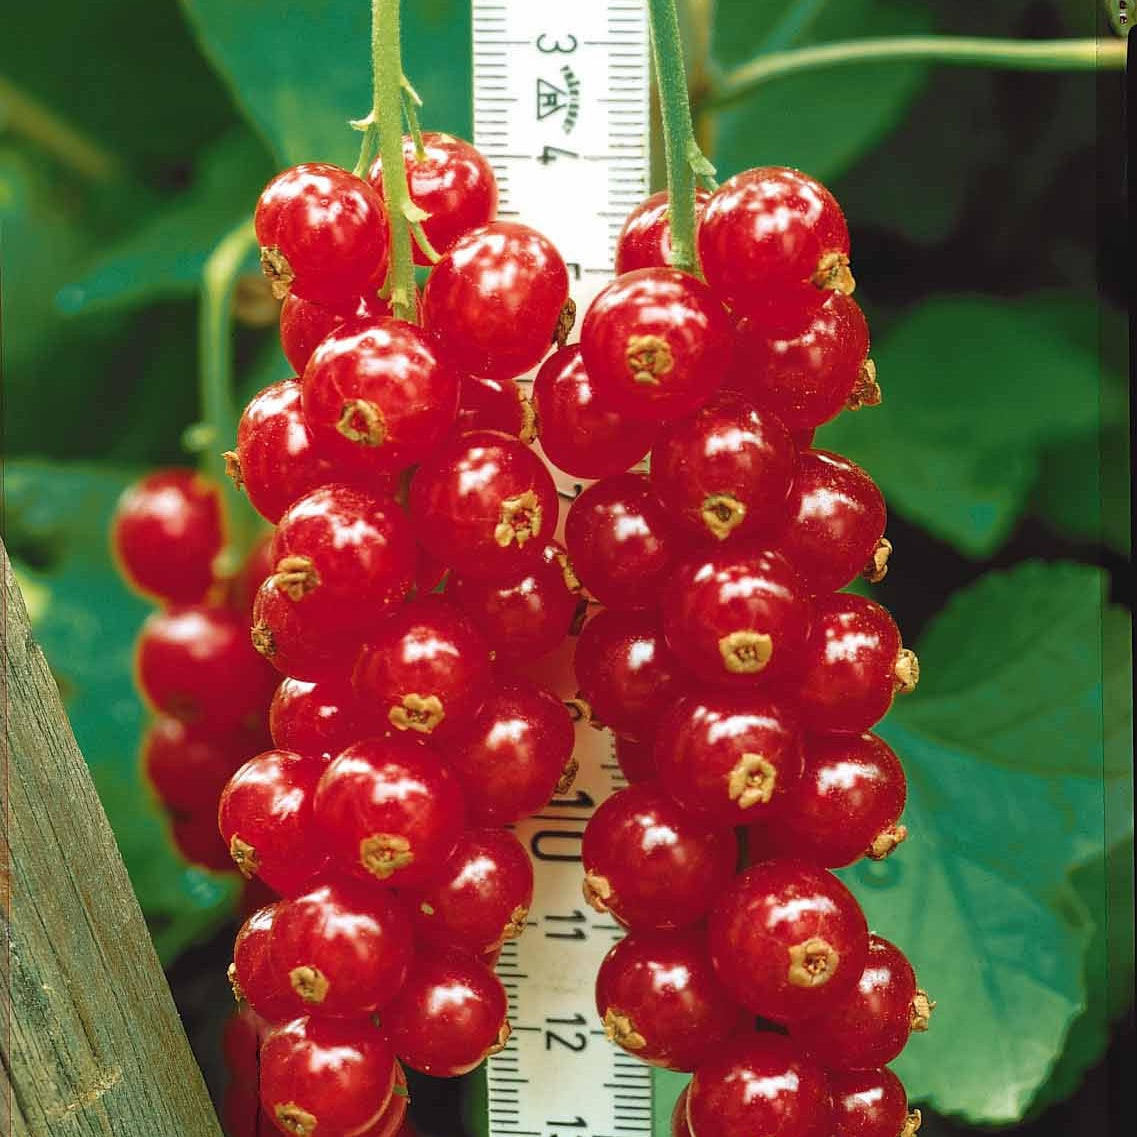 Collection de 9 Fruitiers à fruits rouges - Rubus idaeus 'sumo 2', ribes rubrum 'rovada', frag